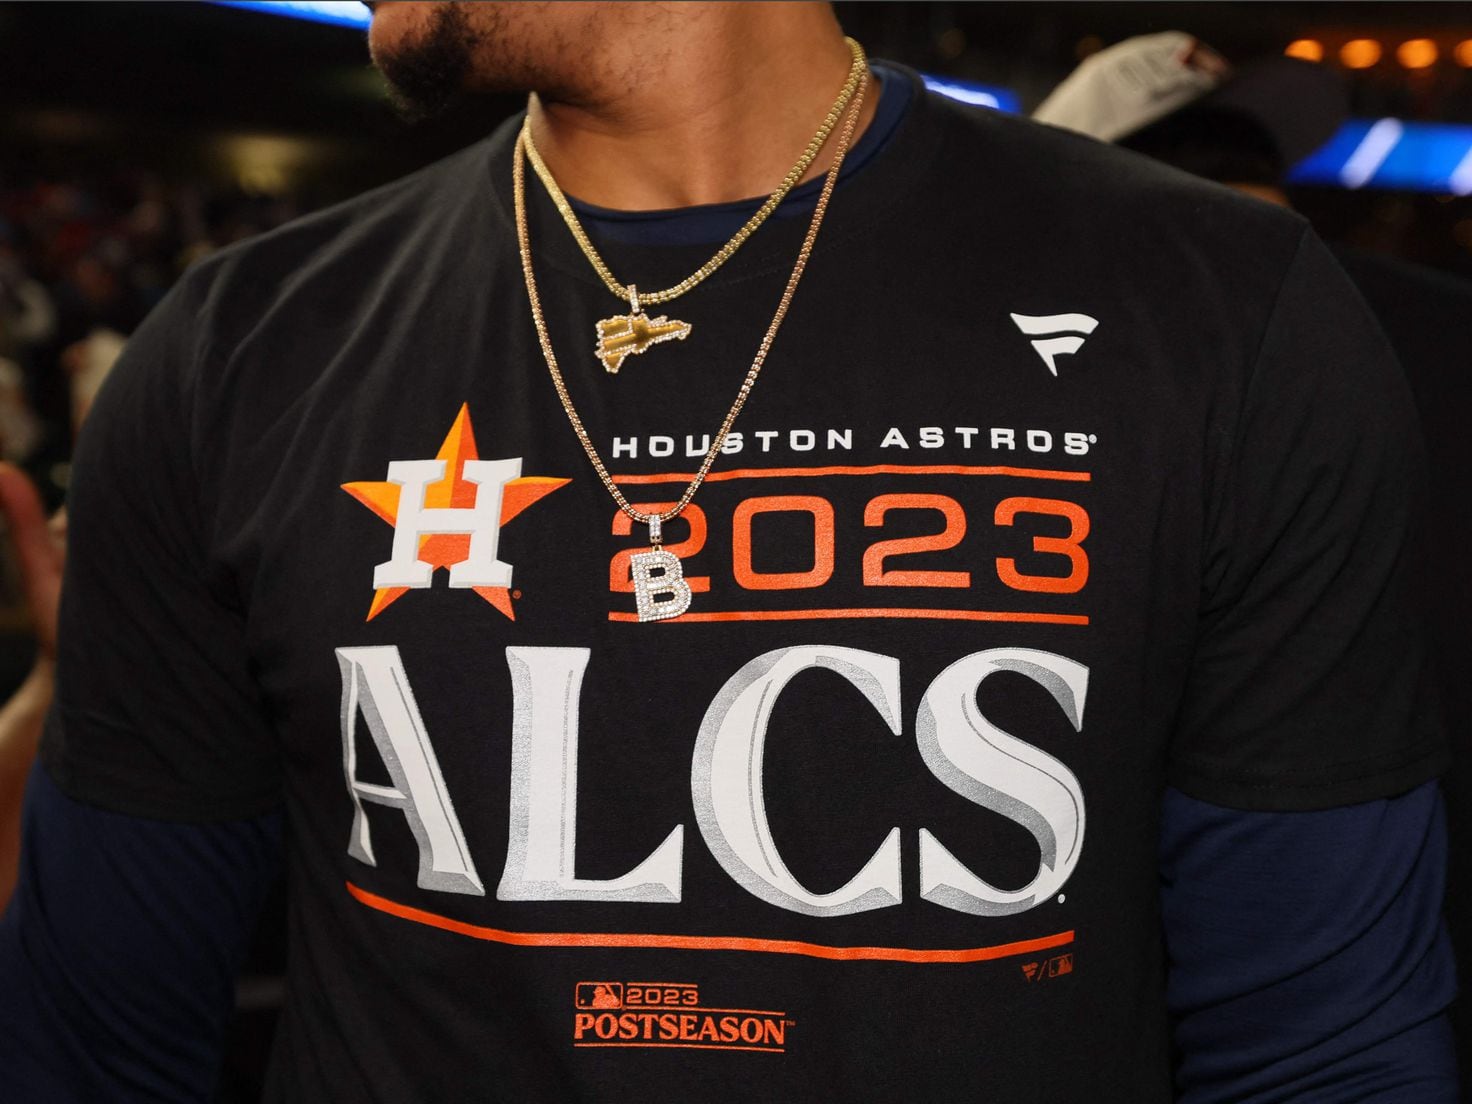 Alcs 2023 Astros Vs Rangers American League Championship Series Shirt